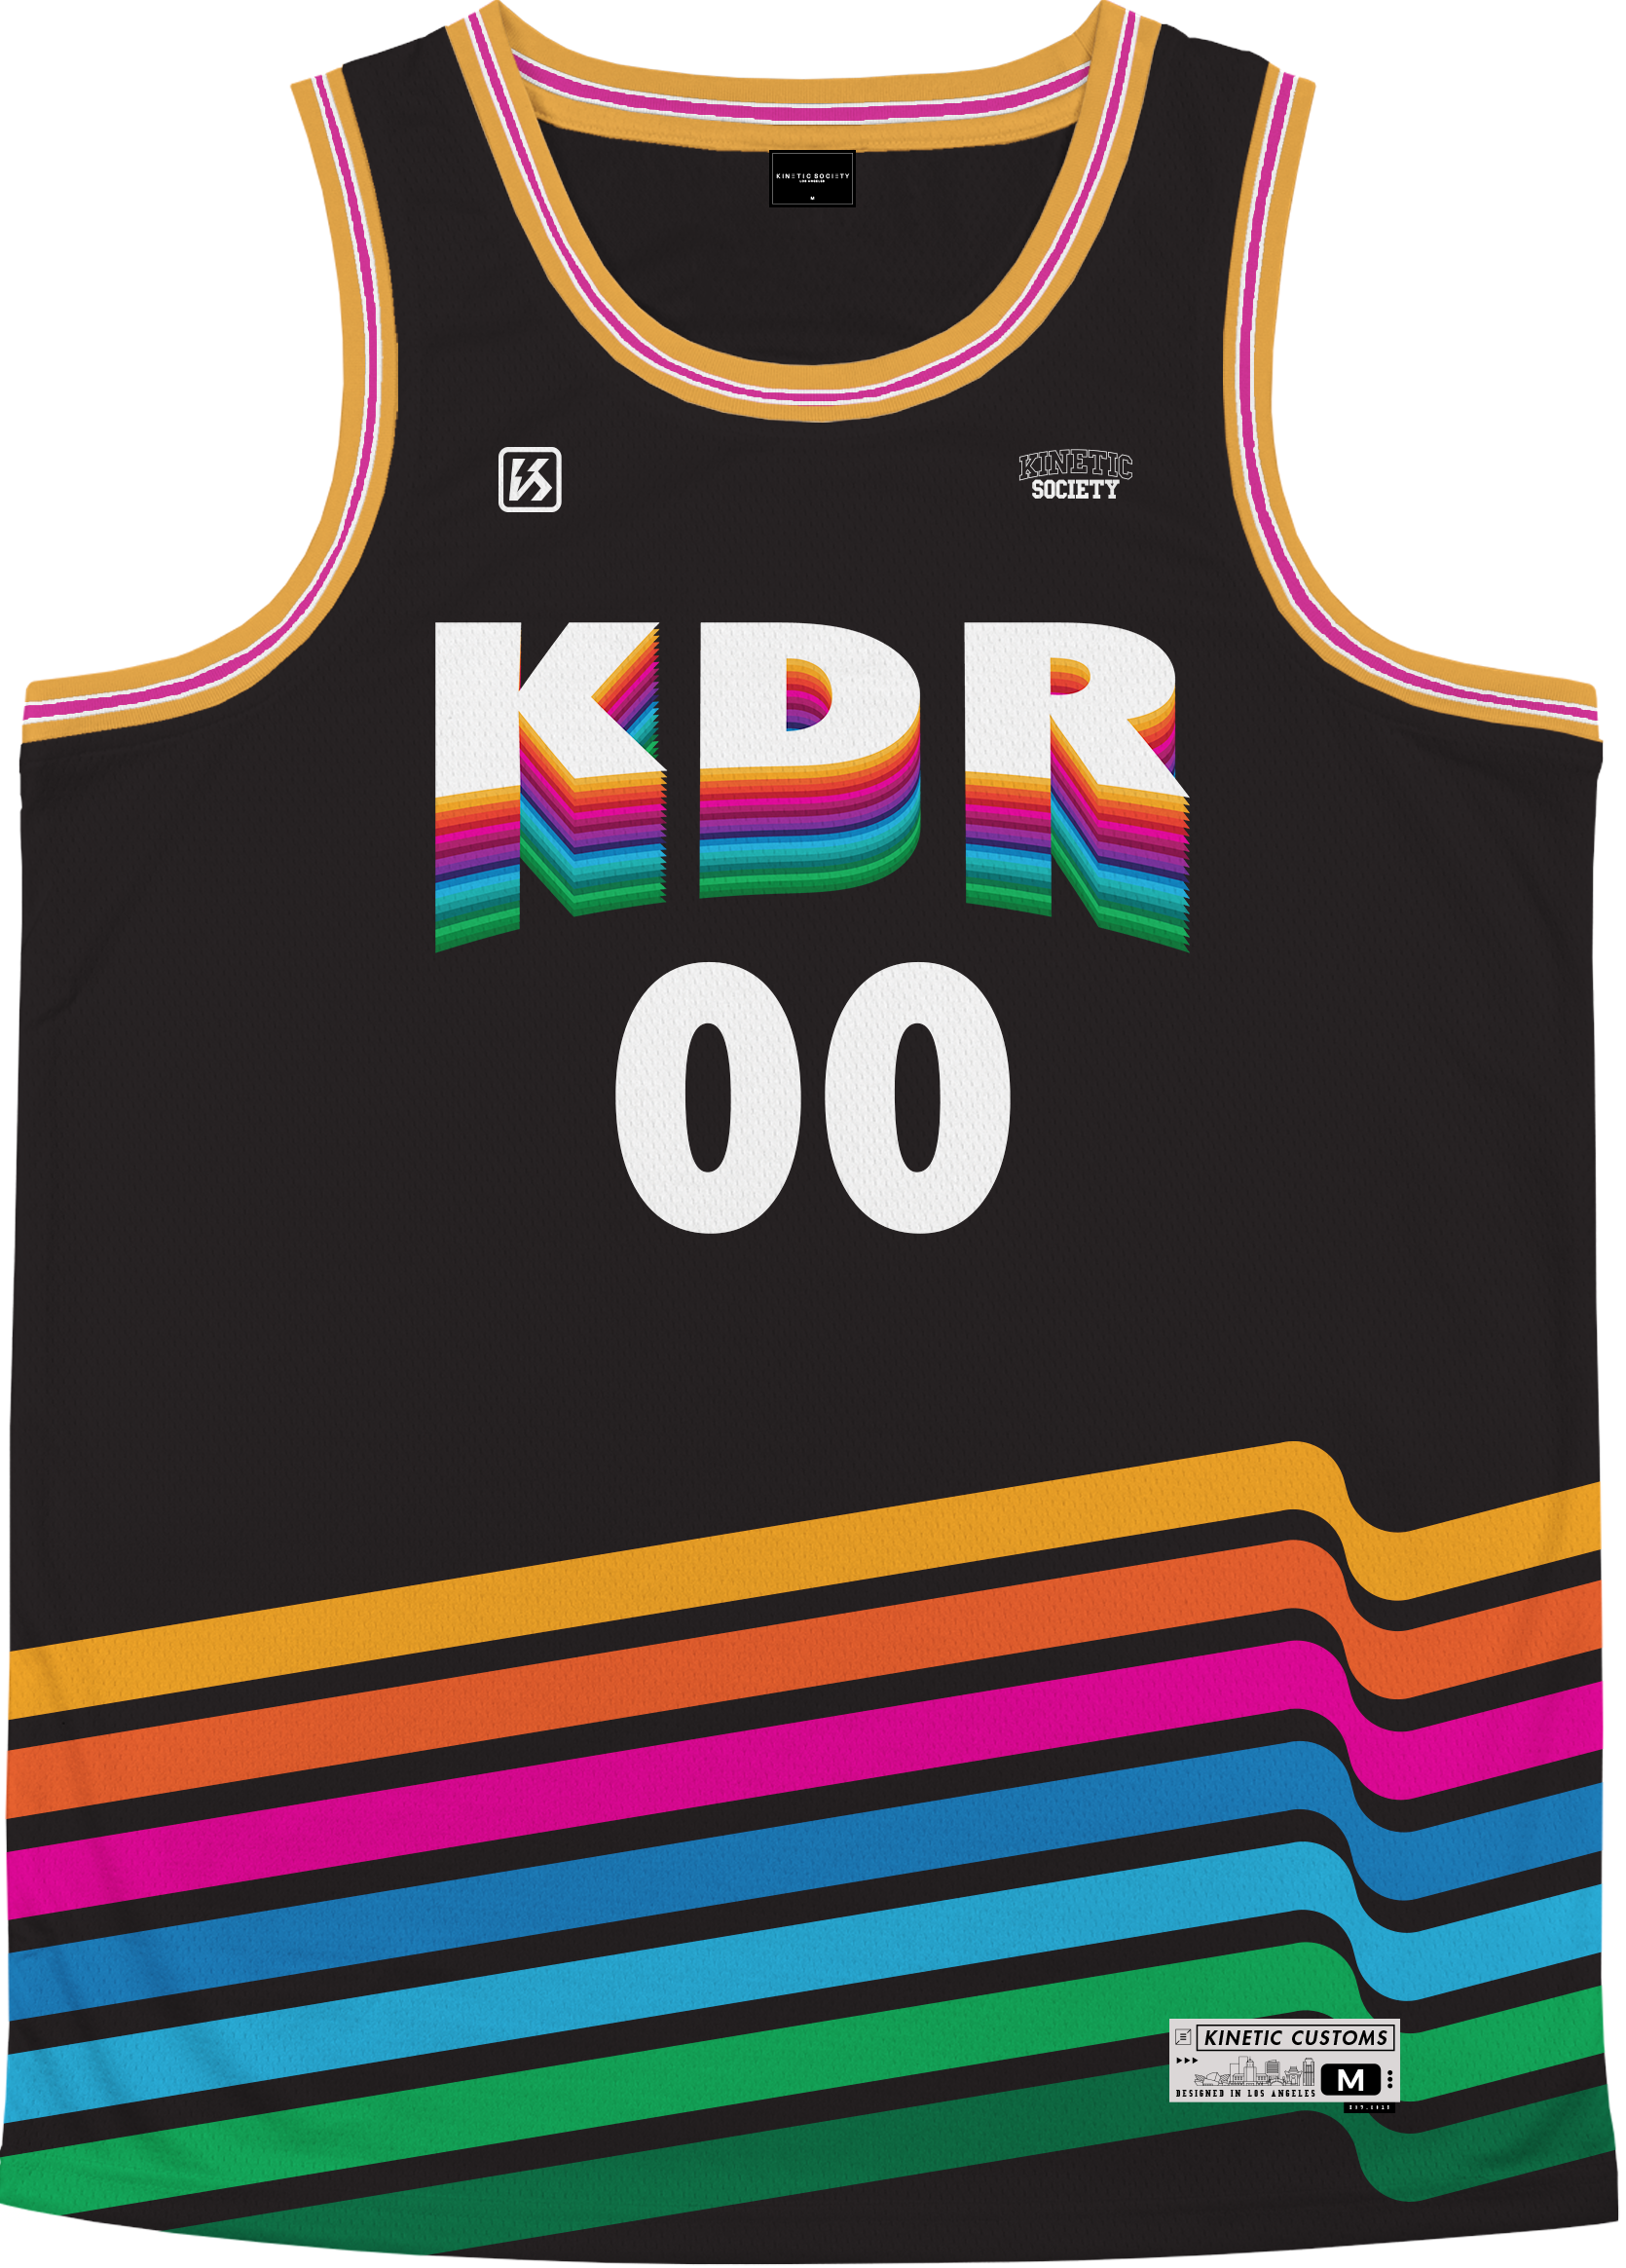 KAPPA DELTA RHO - 80max Basketball Jersey